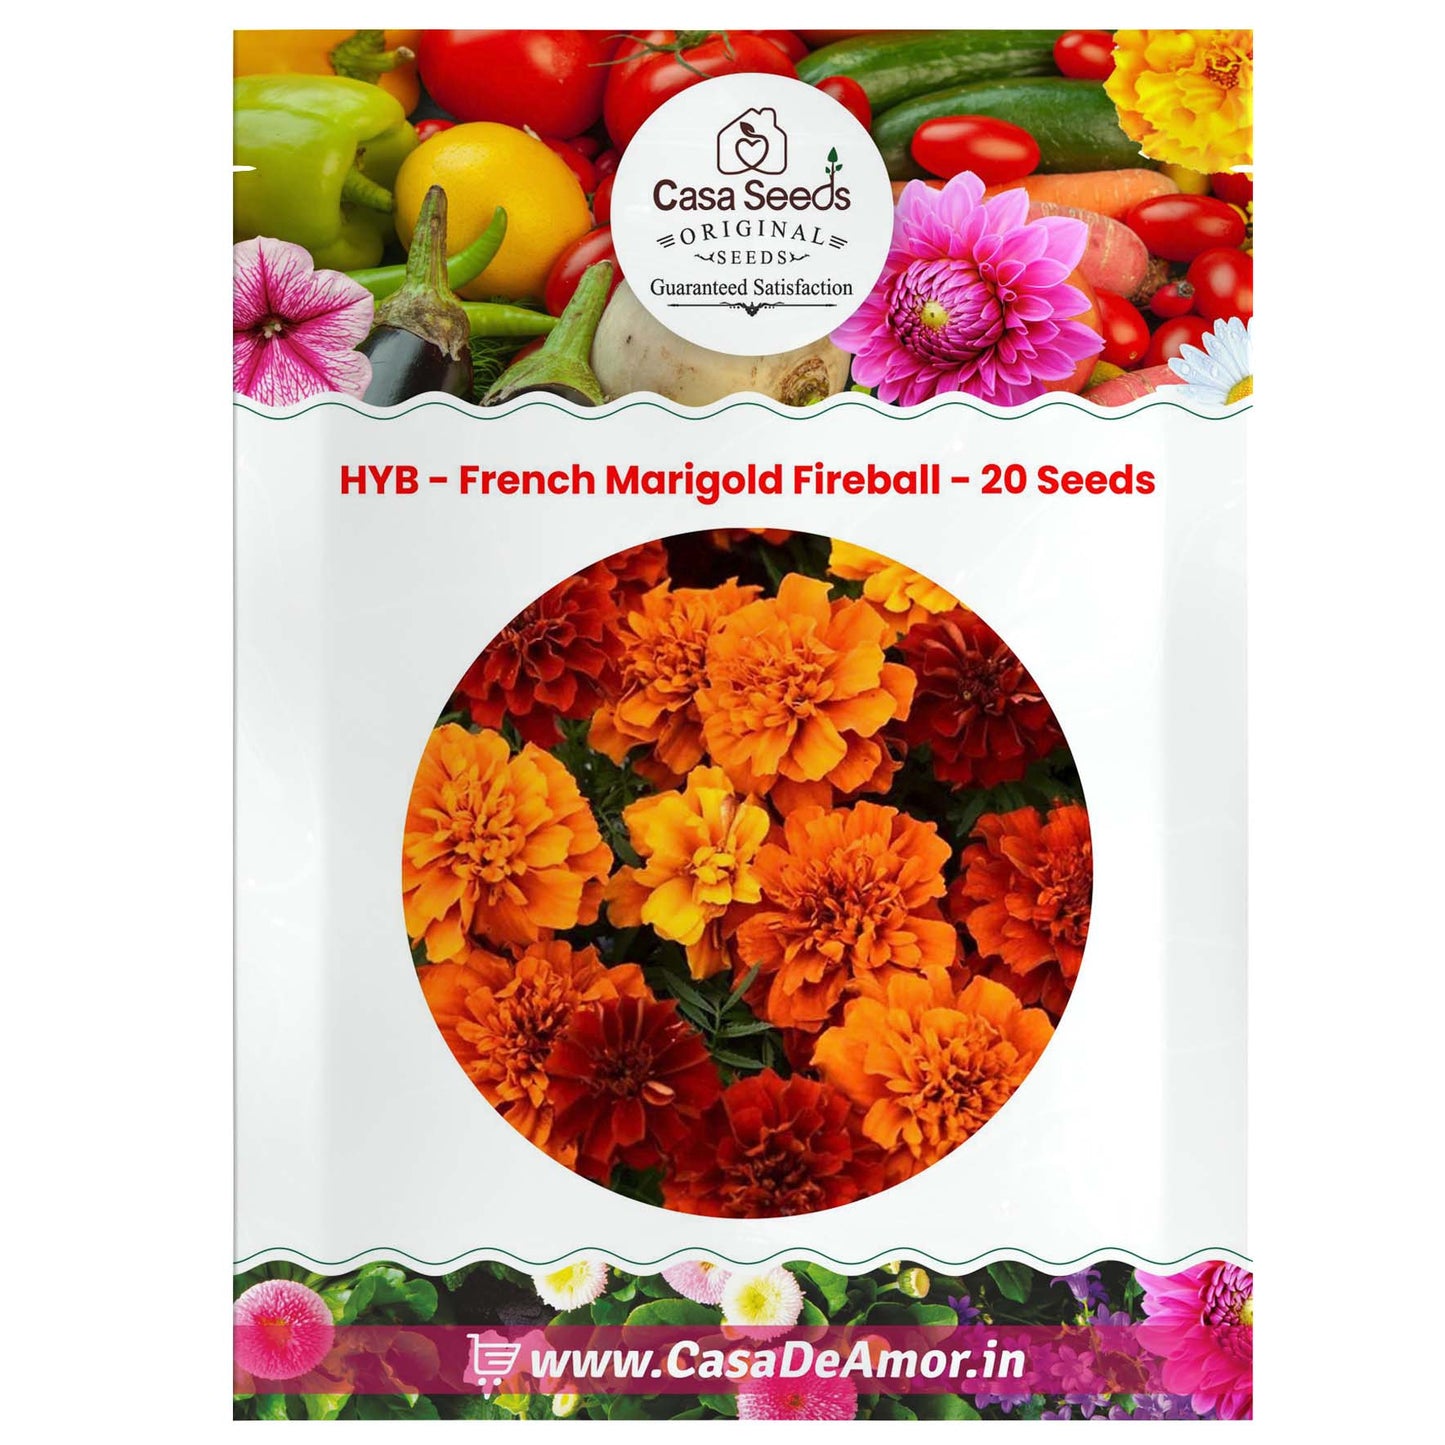 HYB - French Marigold Fireball - 20 Seeds